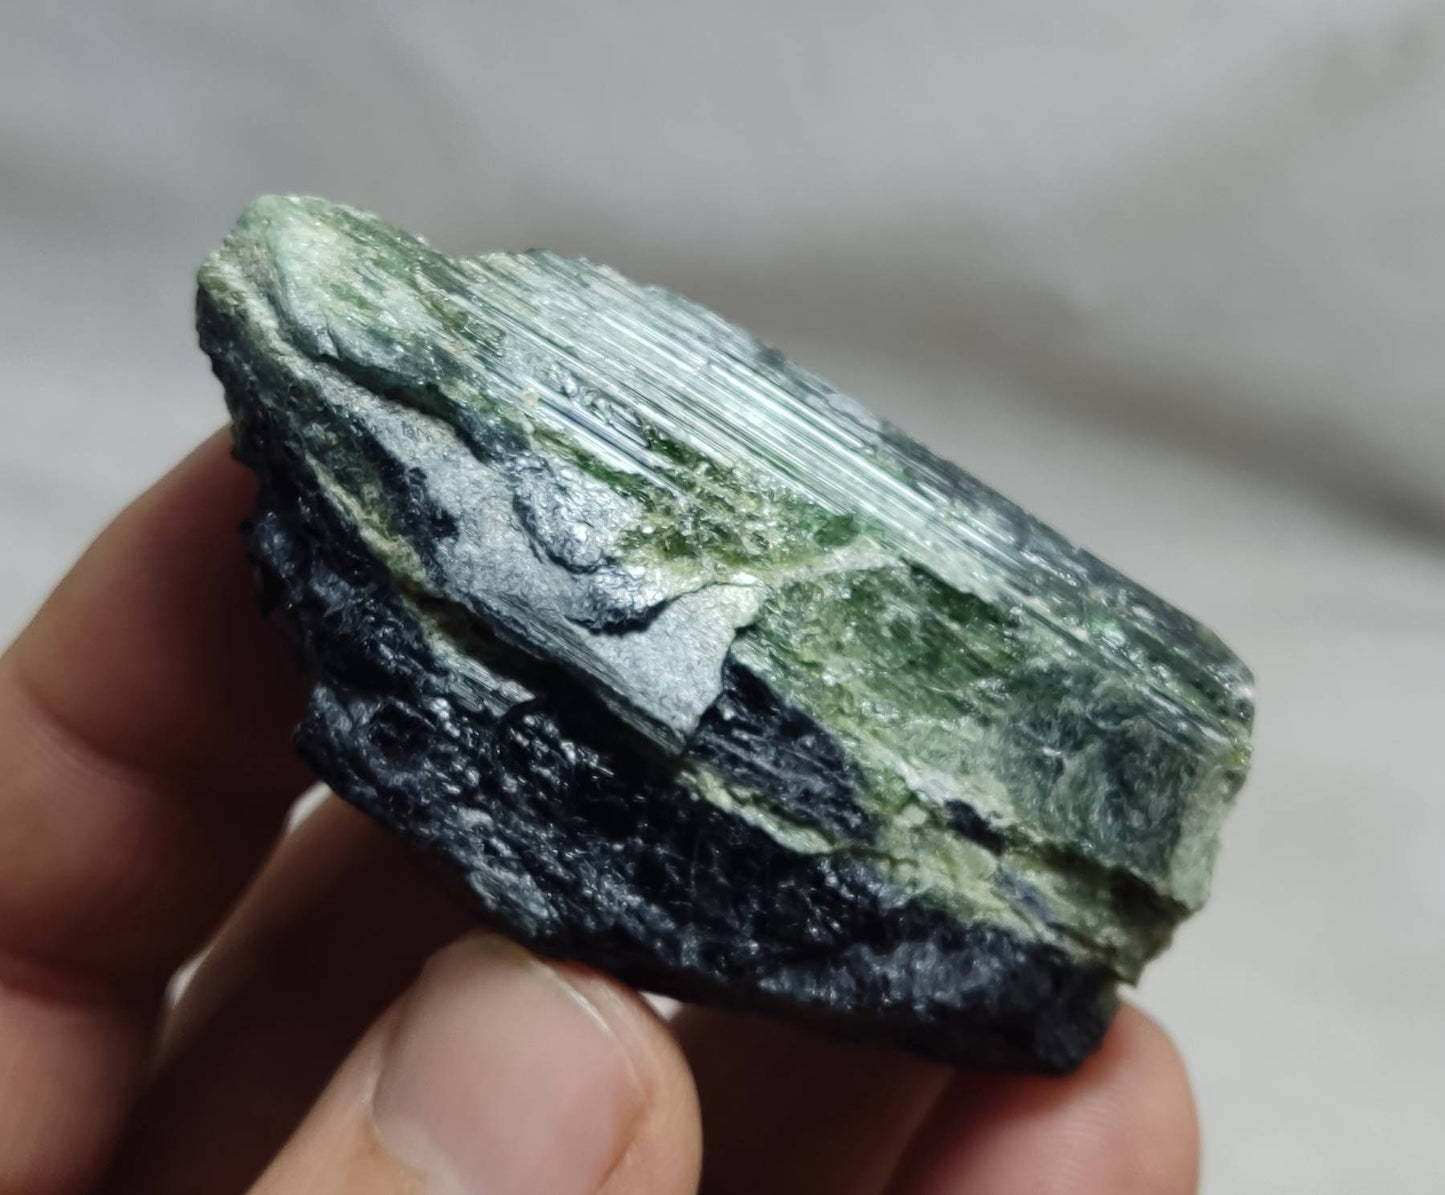 Dark green and black color Tourmaline crystal specimen 69 grams